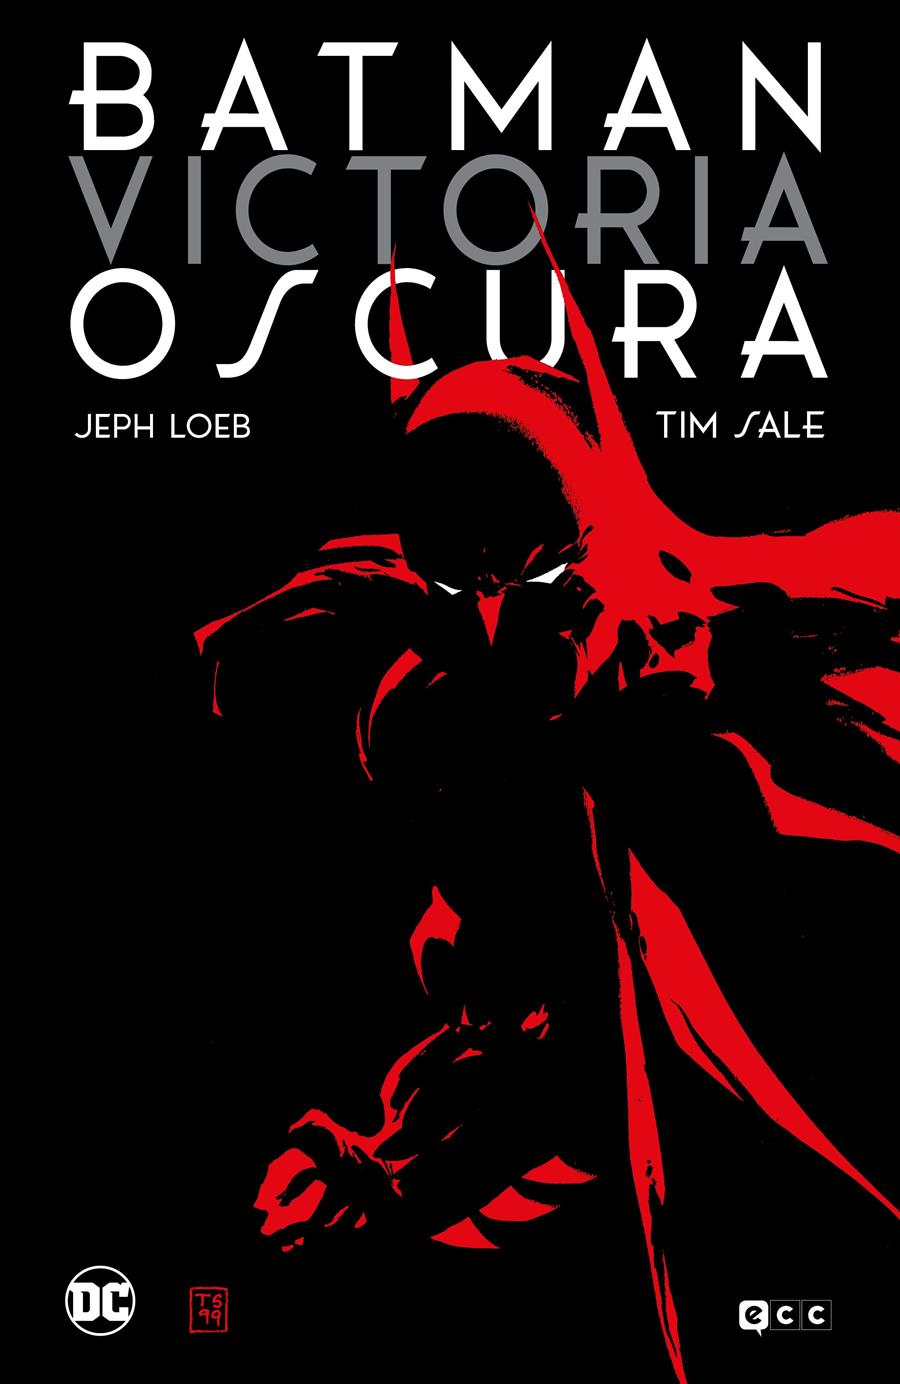 Batman: Victoria oscura (Edición Deluxe)  | N0222-ECC108 |  Jeph Loeb, Tim Sale | Terra de Còmic - Tu tienda de cómics online especializada en cómics, manga y merchandising